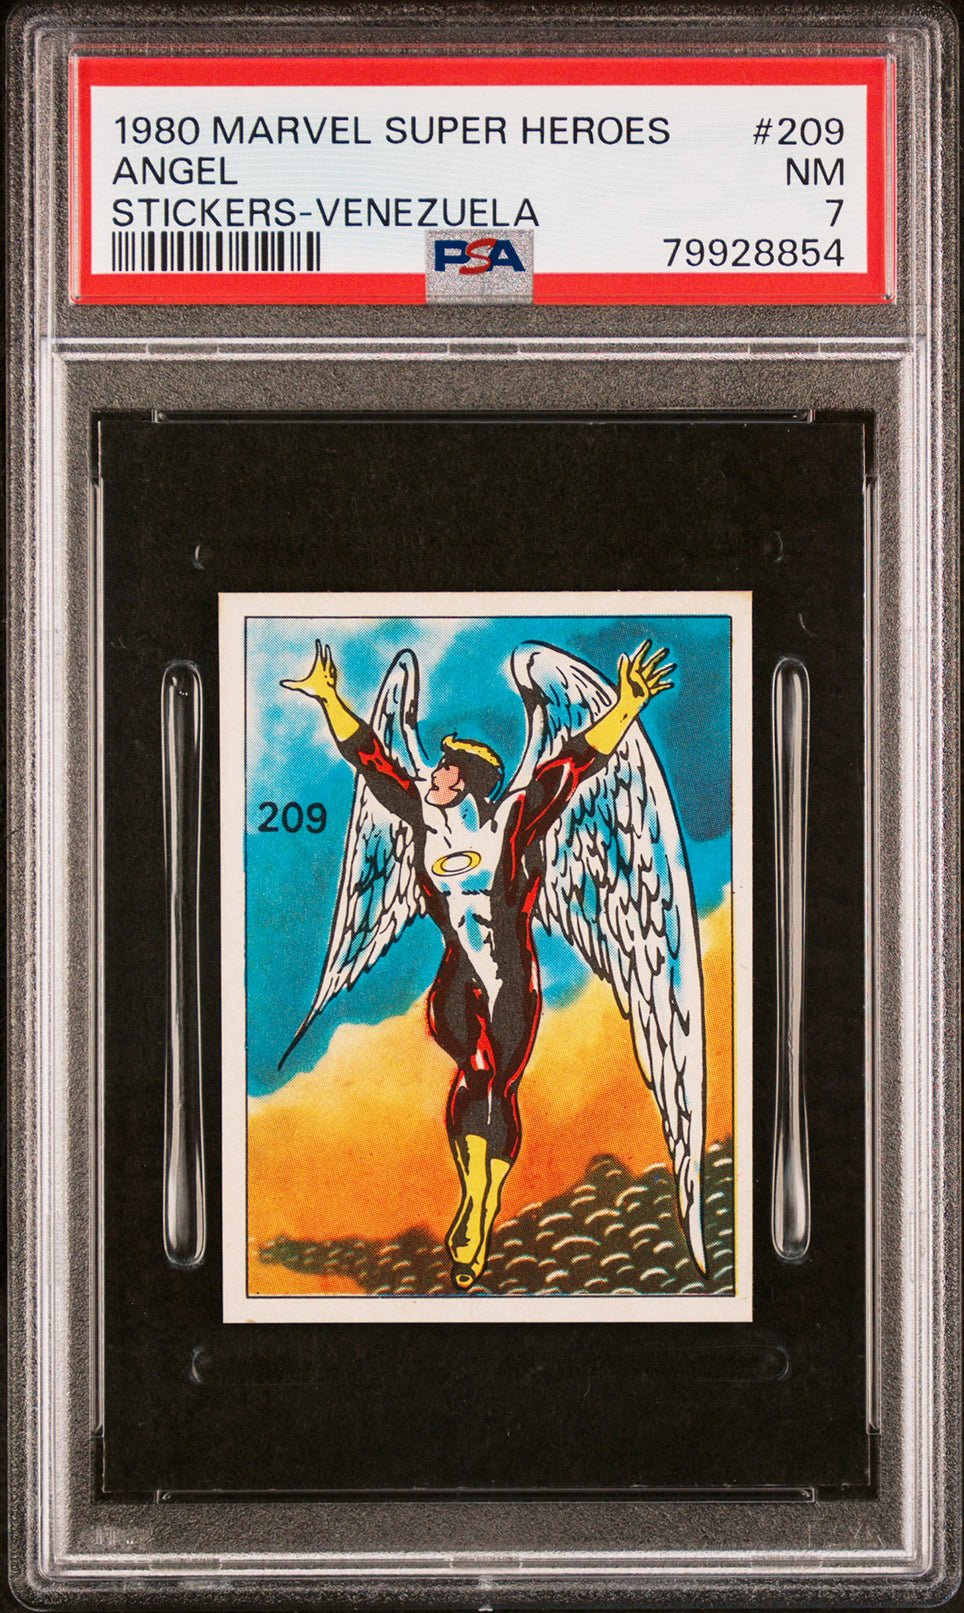 ANGEL PSA 7 1980 Marvel Super Heroes Sticker Venezuela #209 Marvel Graded Cards Sticker - Hobby Gems